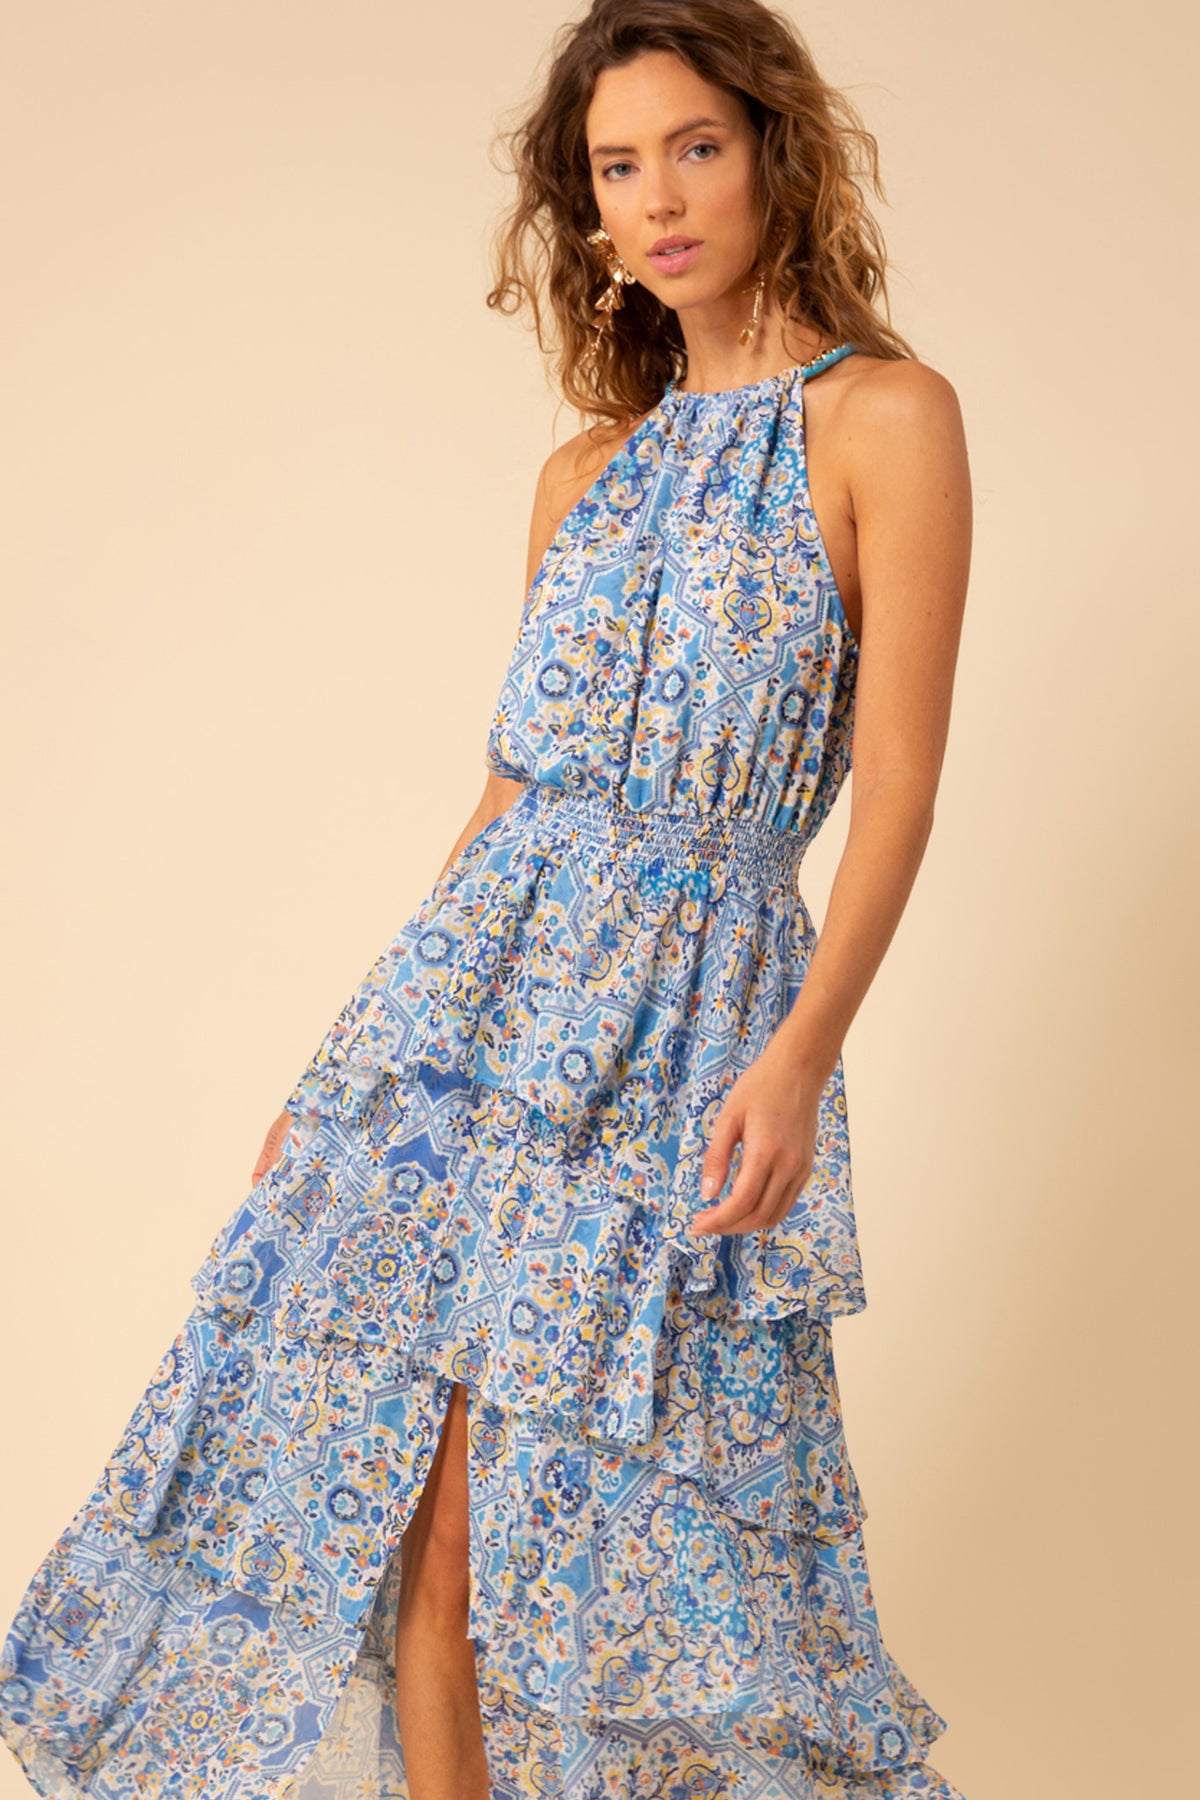 Hale Bob Jordyn Halter Dress in Blue - Size S Available